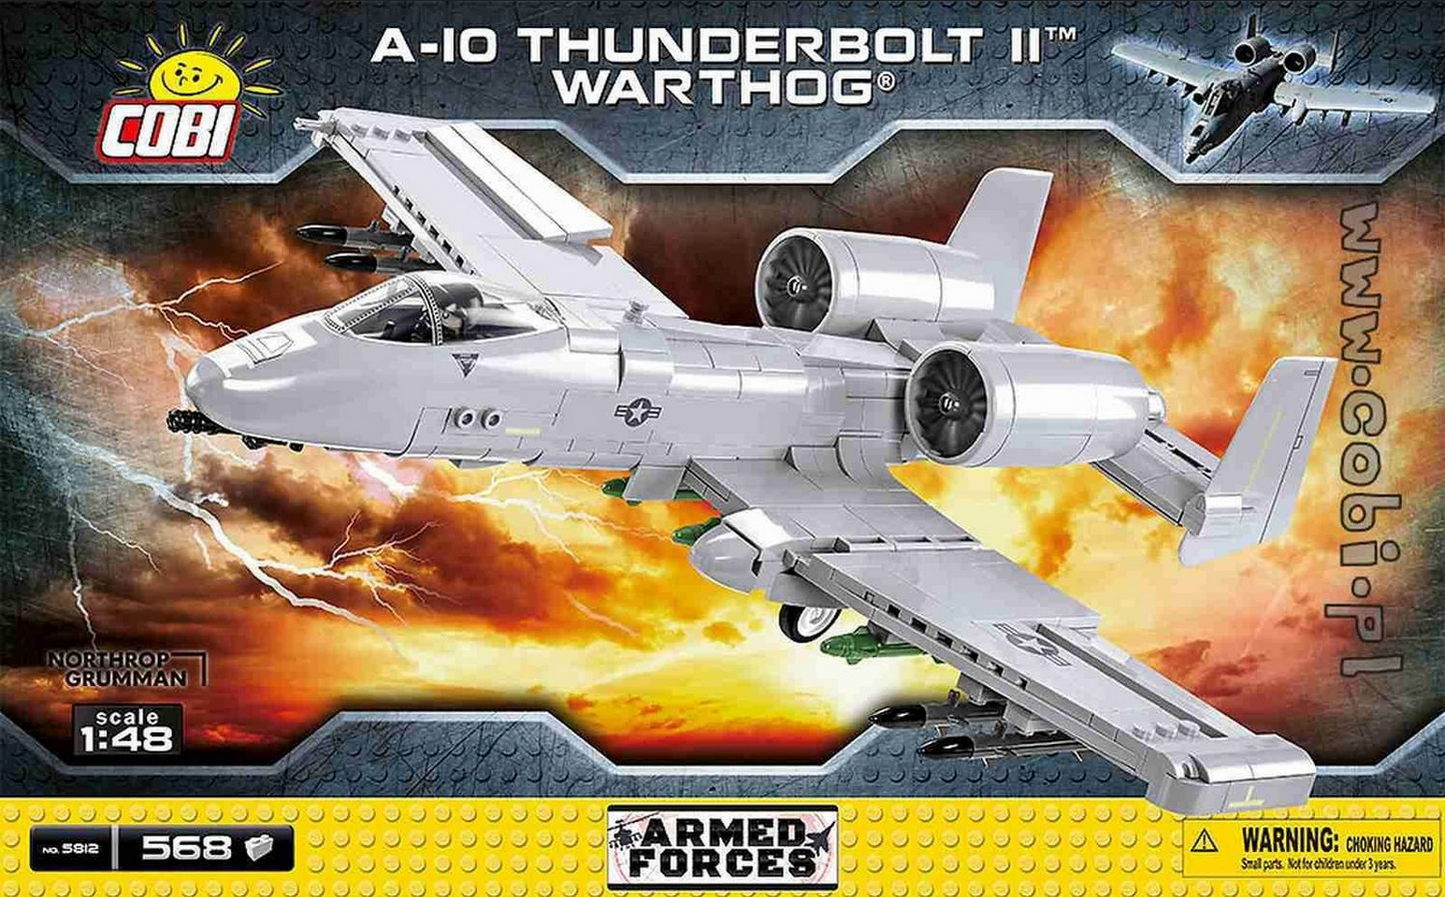 A-10 Thunderbolt II Warthog - 568 pièces - COBI 1/48